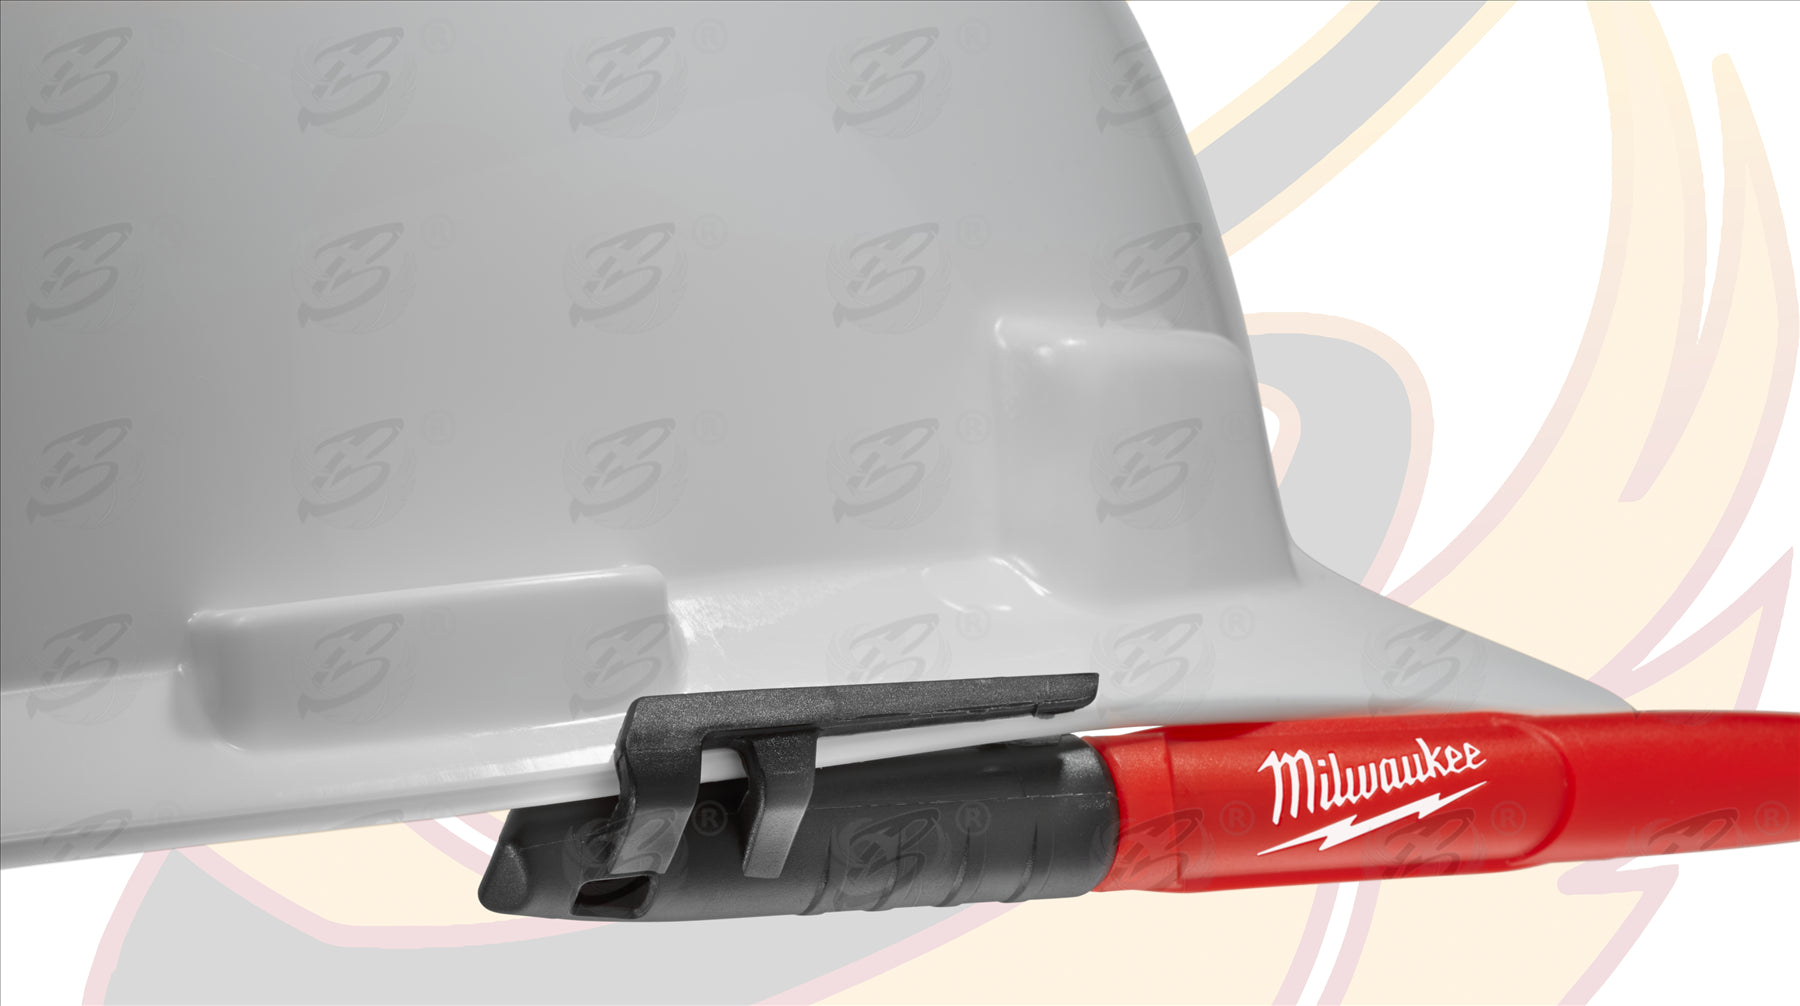 MILWAUKEE INKZALL 1mm ALL SURFACE MARKER PEN ( x9 )